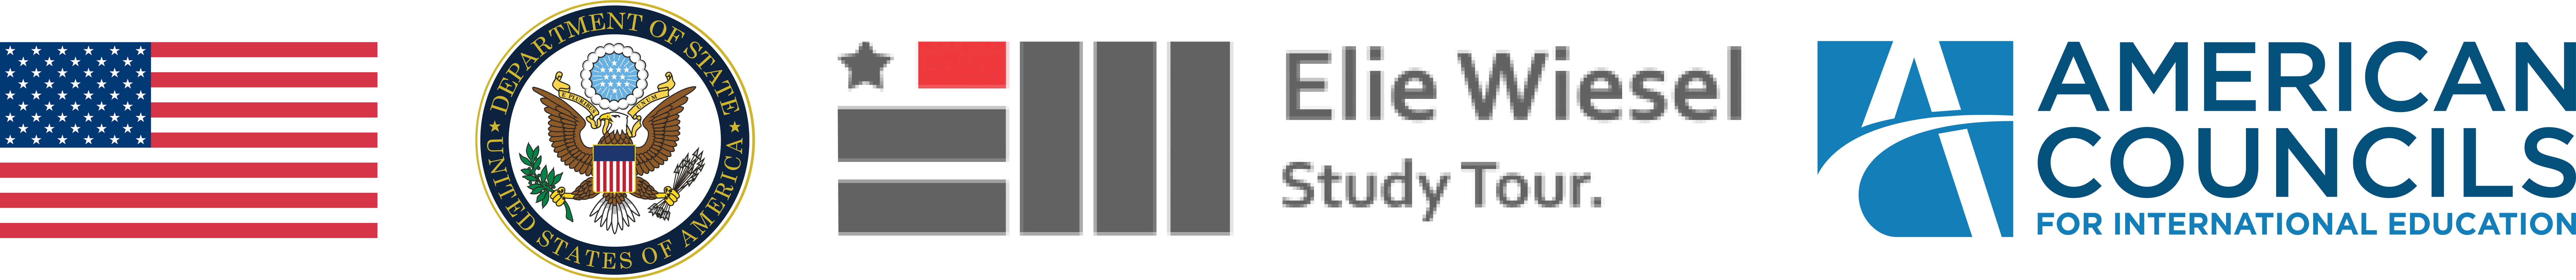 Elie Wiesel Study Tour logo, U.S. flag, DOS logo, and American Councils logo